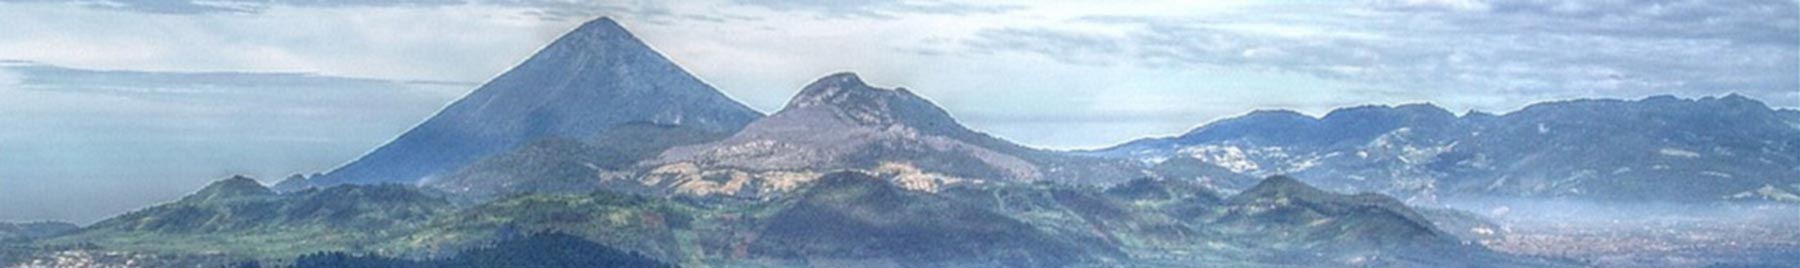 The Santa María volcano Cantel, Quetzaltenango, Guatemala